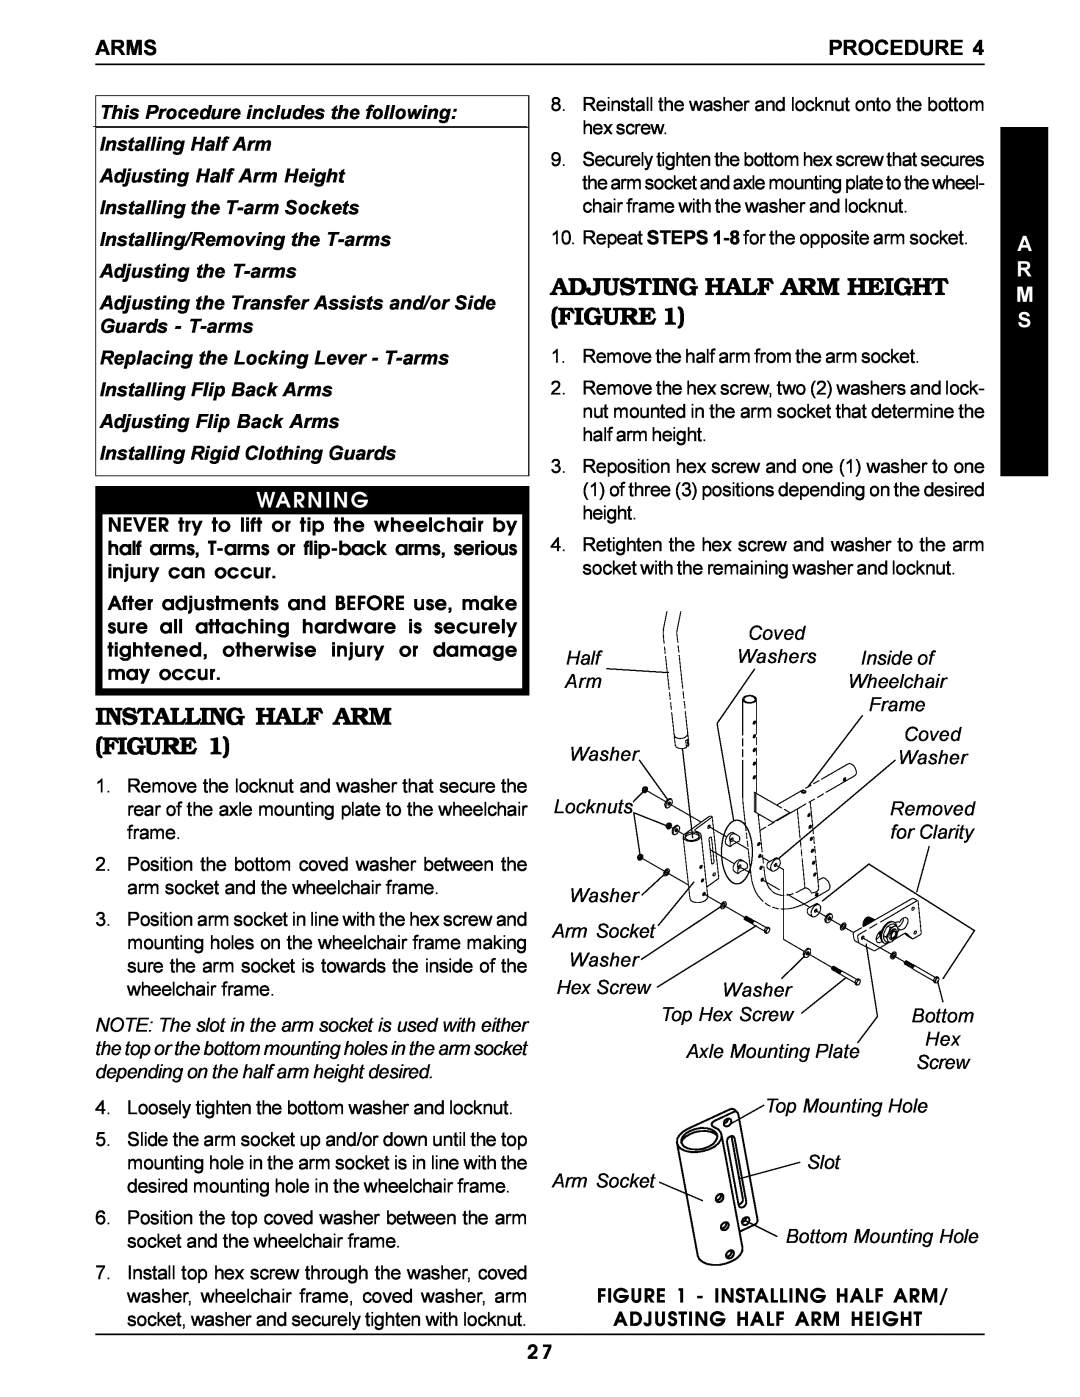 Invacare Pro Series manual Installing Half Arm Figure, Adjusting Half Arm Height Figure, Arms, A R M S, Procedure 